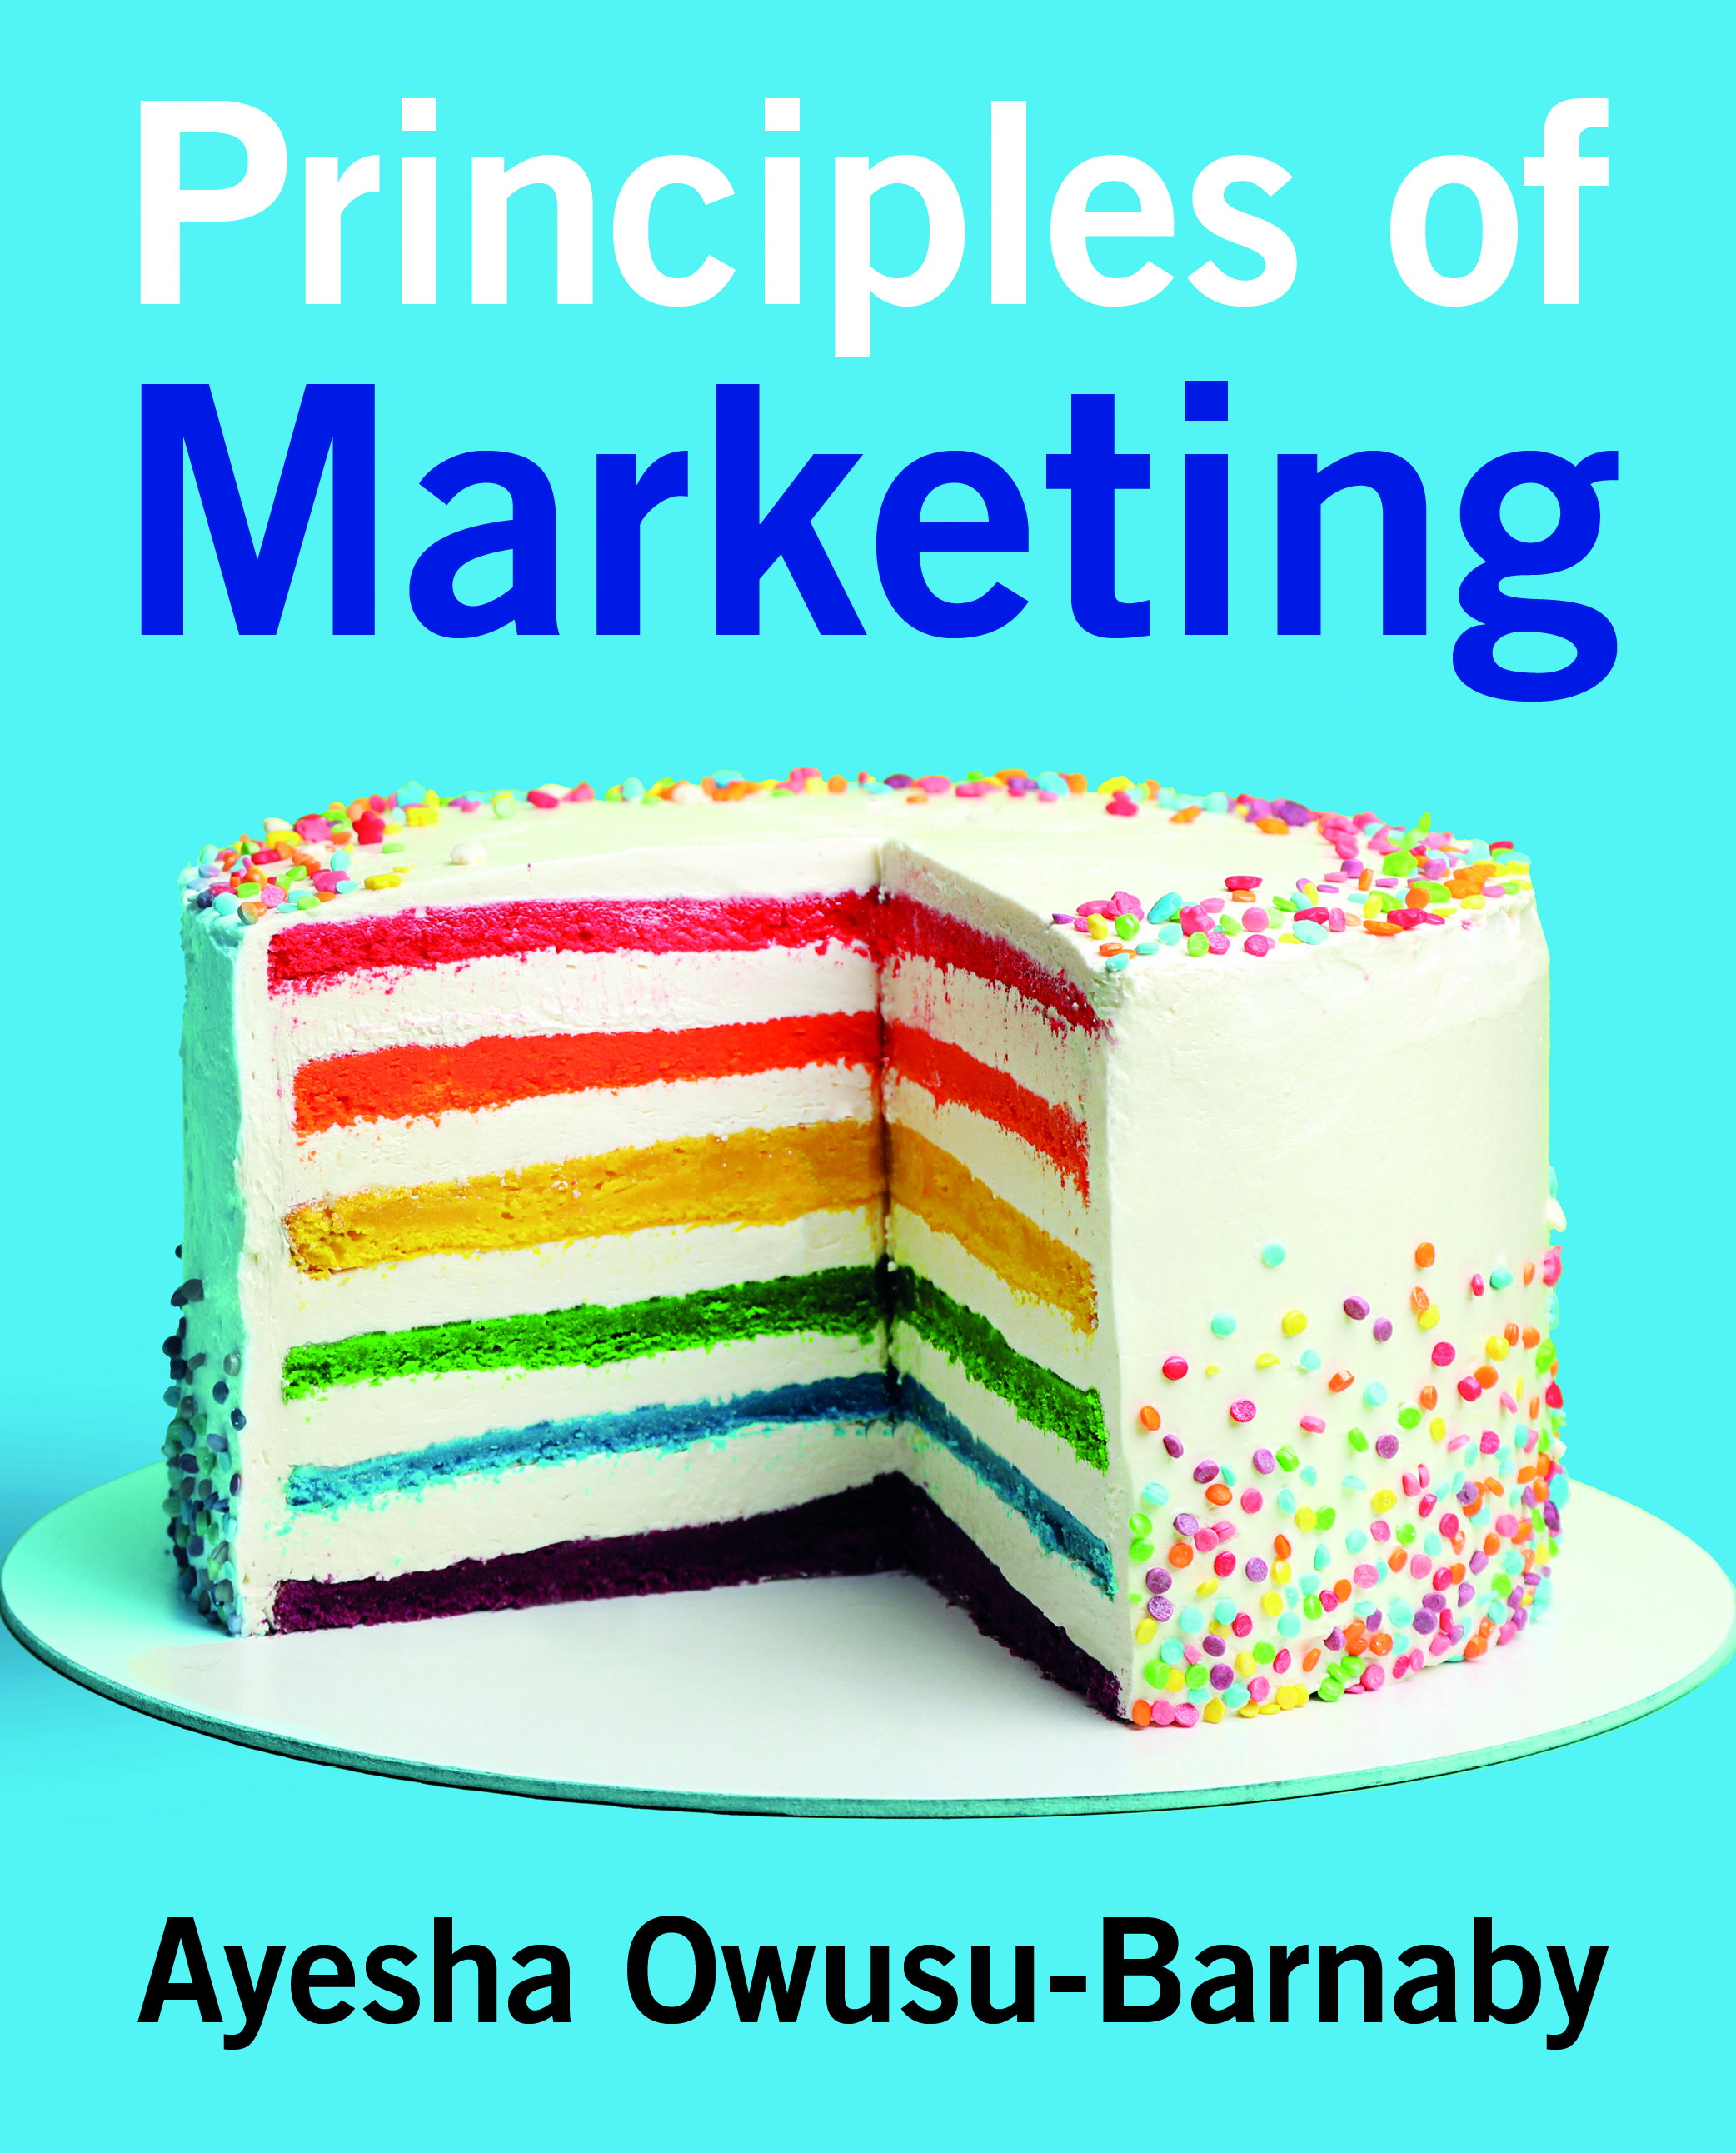 Principles of Marketing Book Jacket